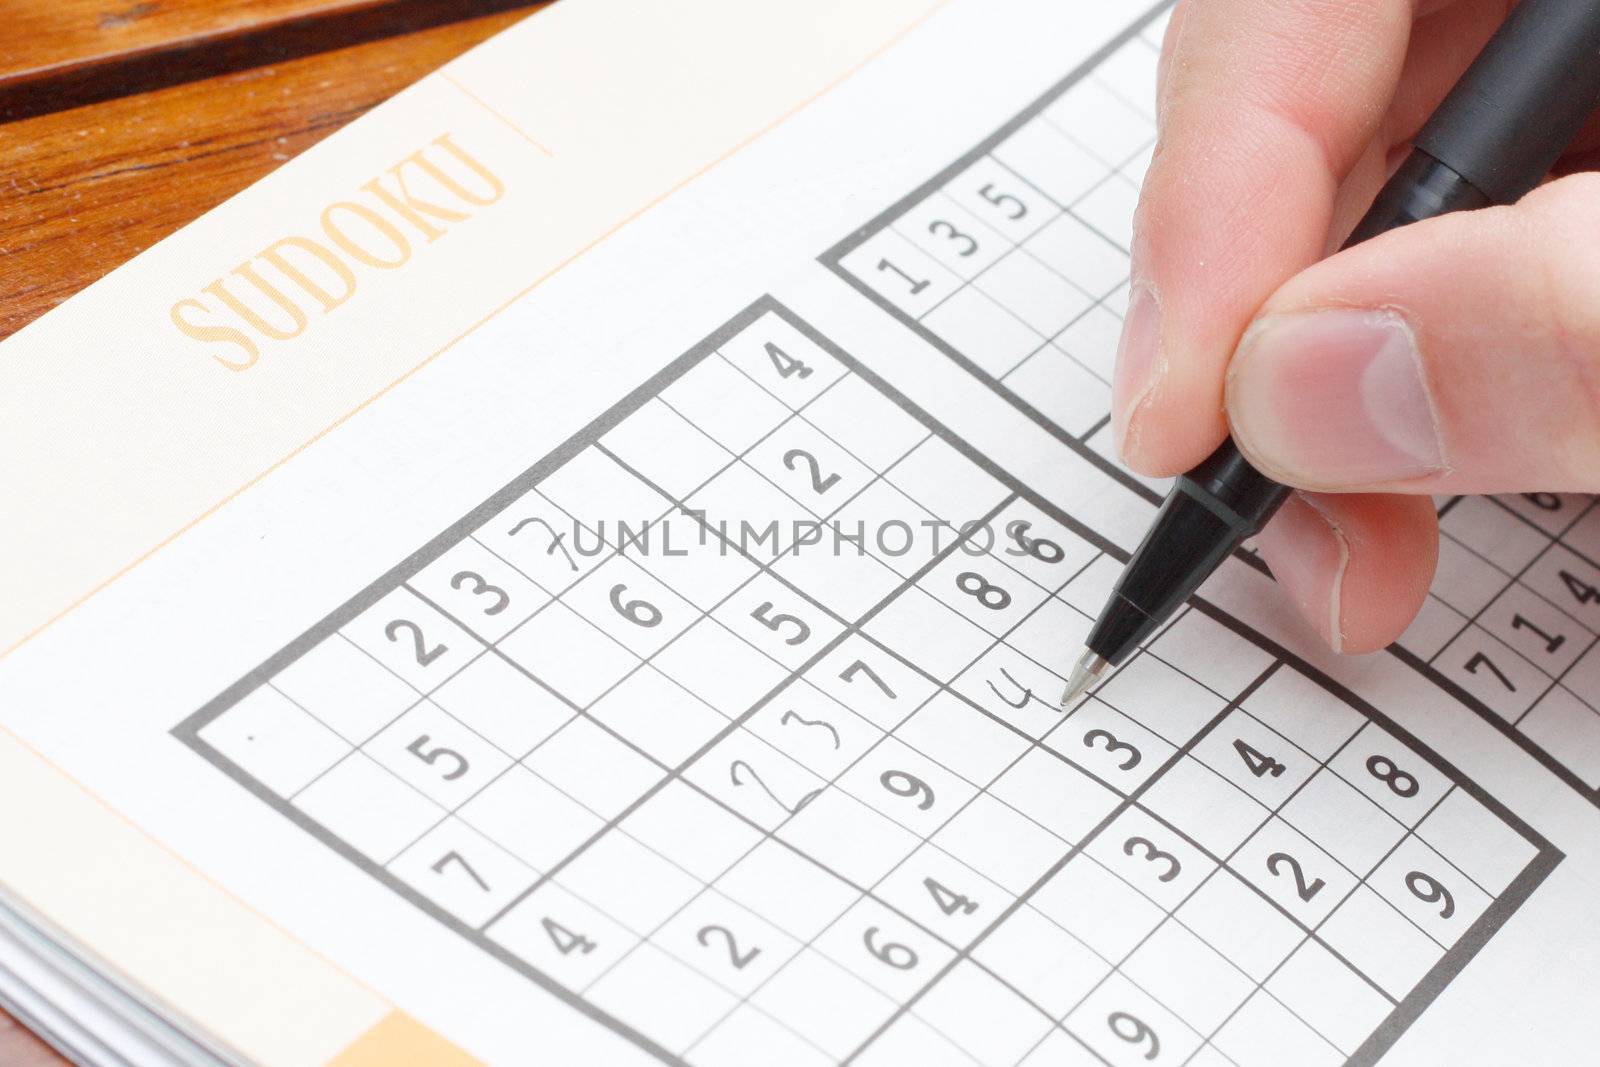 Solving sudoku by leeser